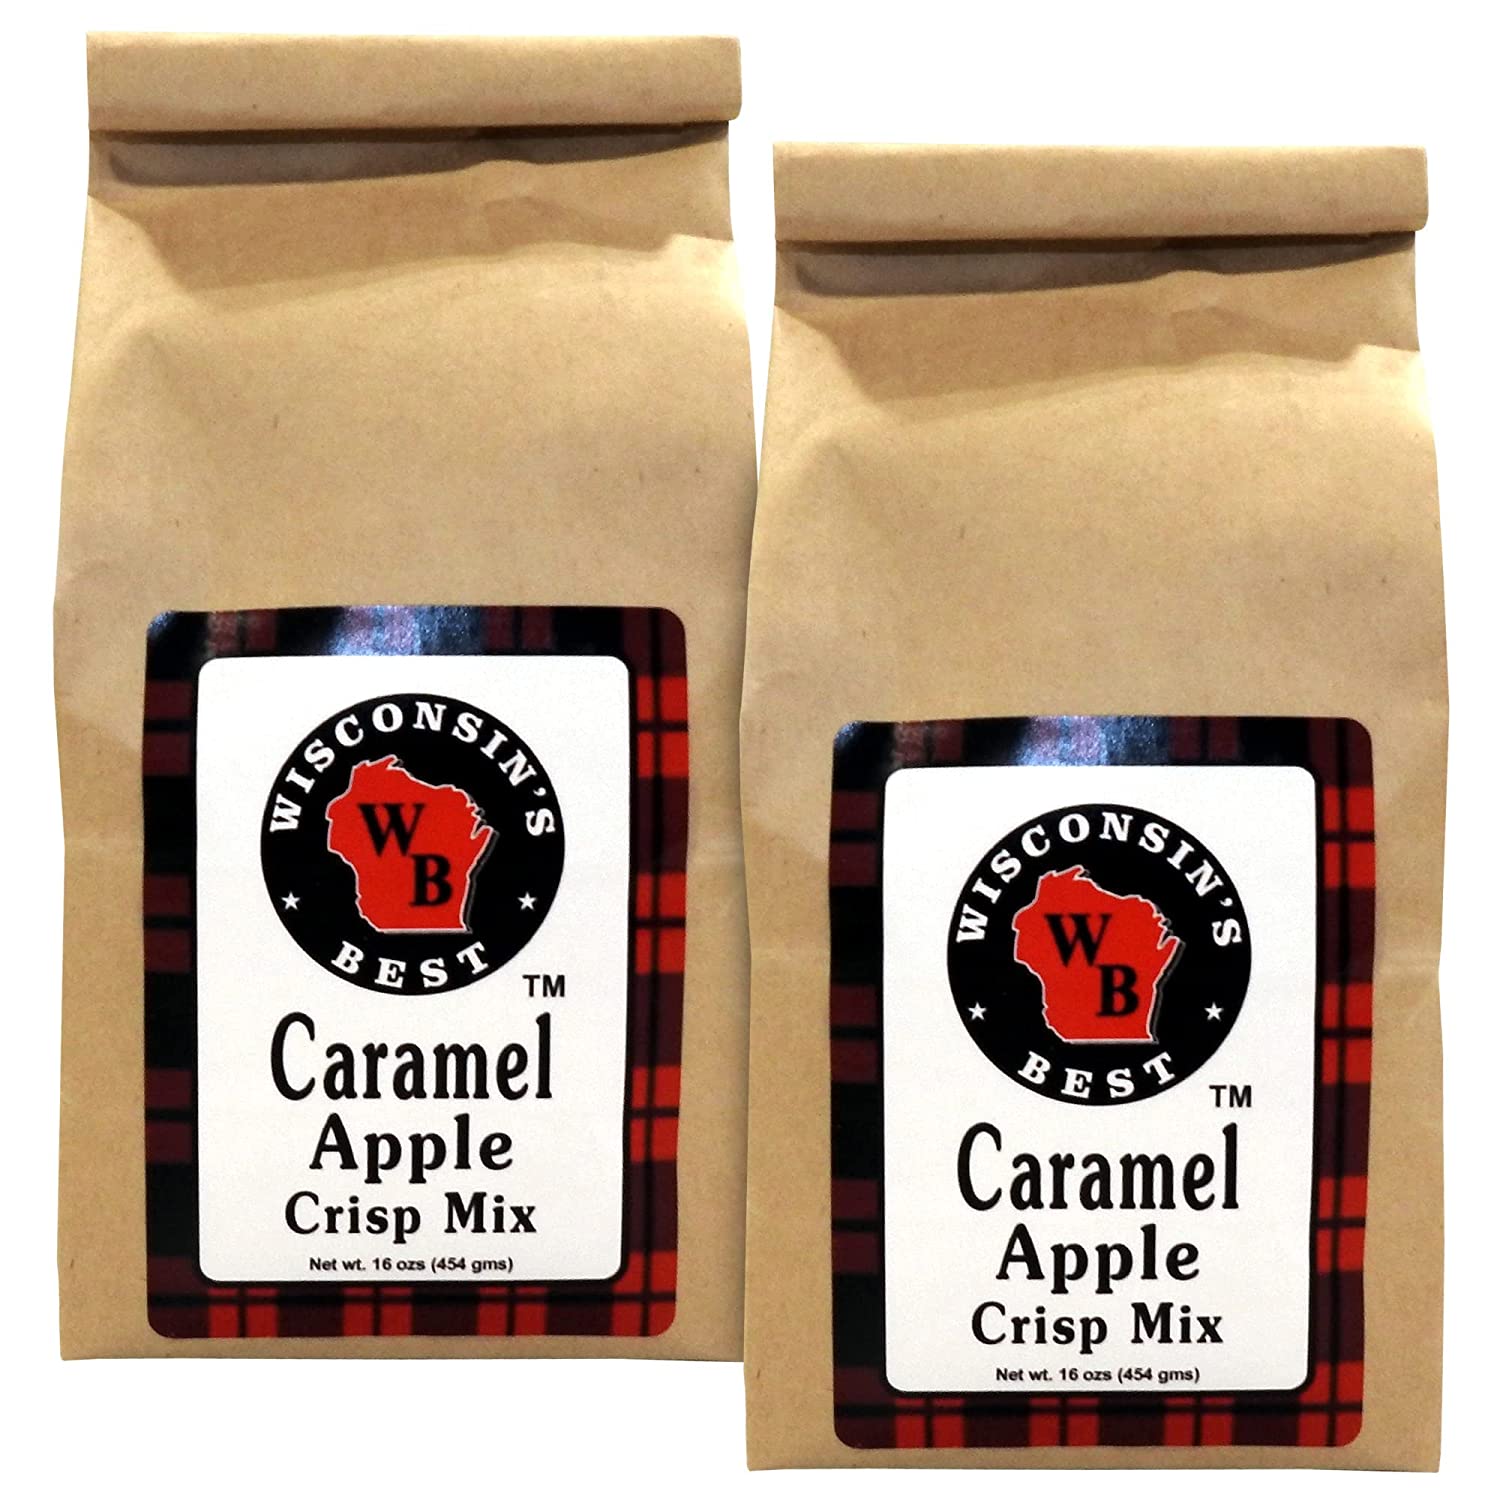 Wisconsin's Best Caramel Apple Crisp Mix